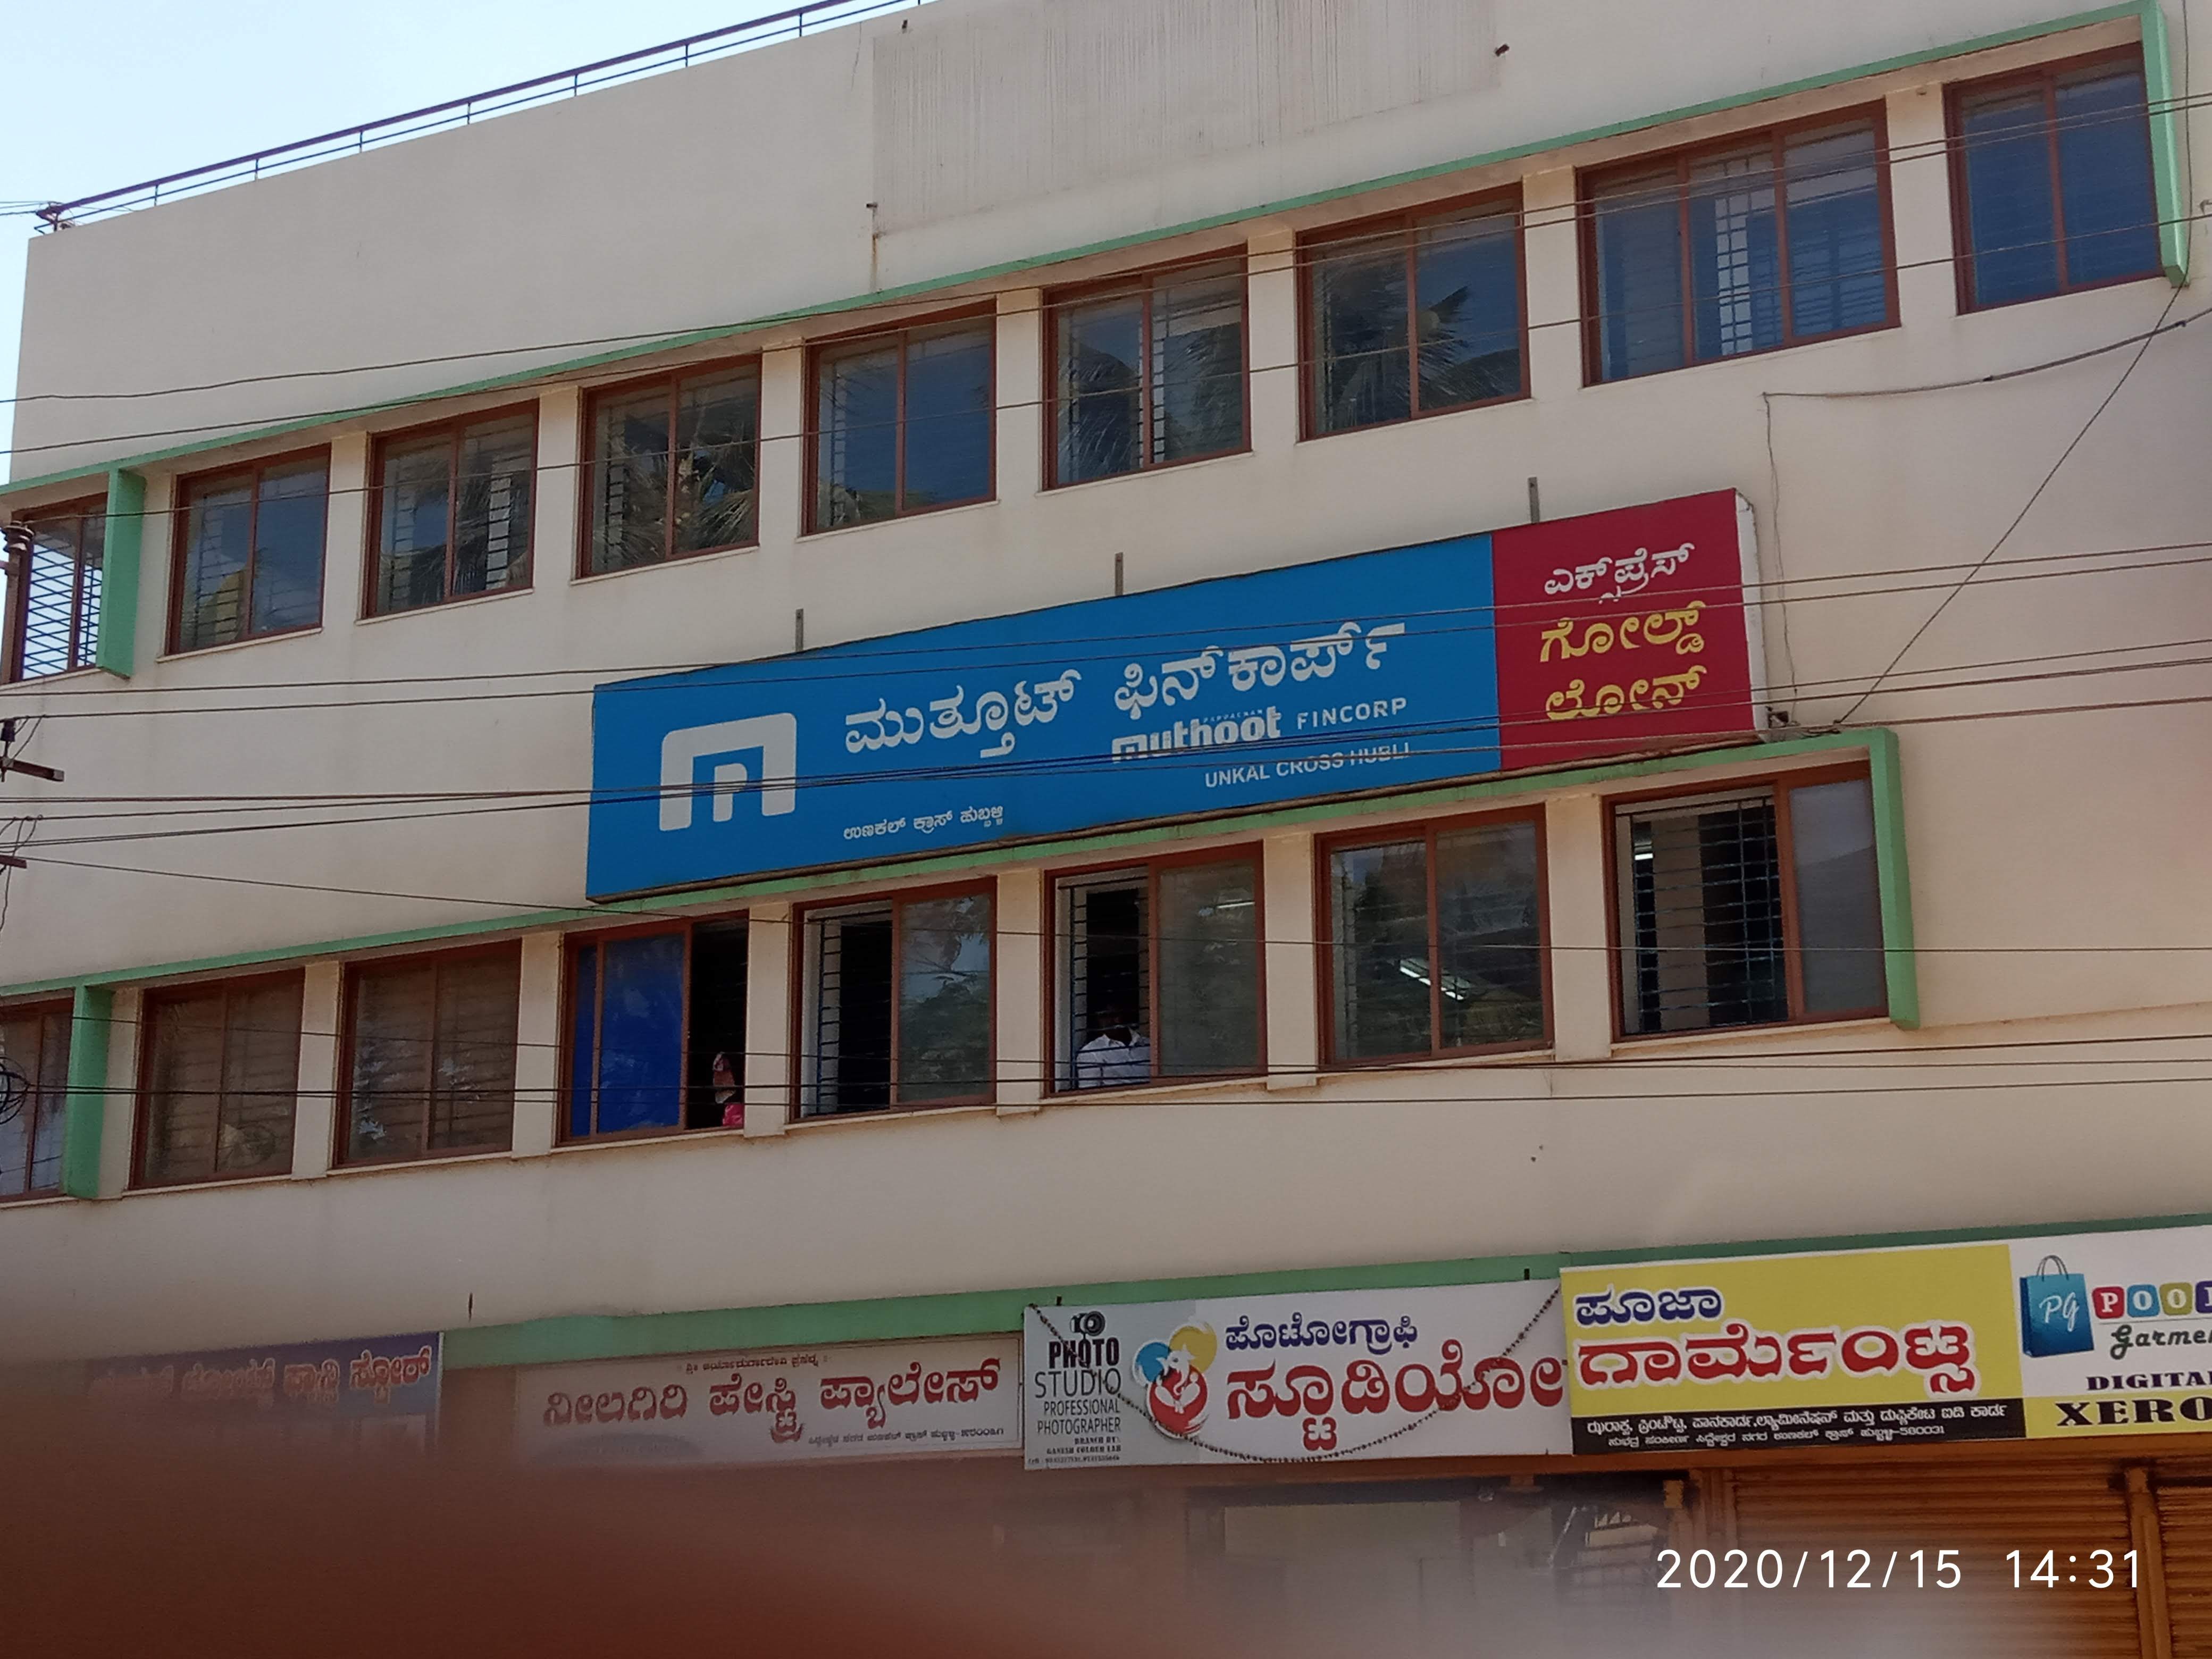 Muthoot Fincorp Gold Loan Services in Near Laxmi Temple, Hubli, Karnataka